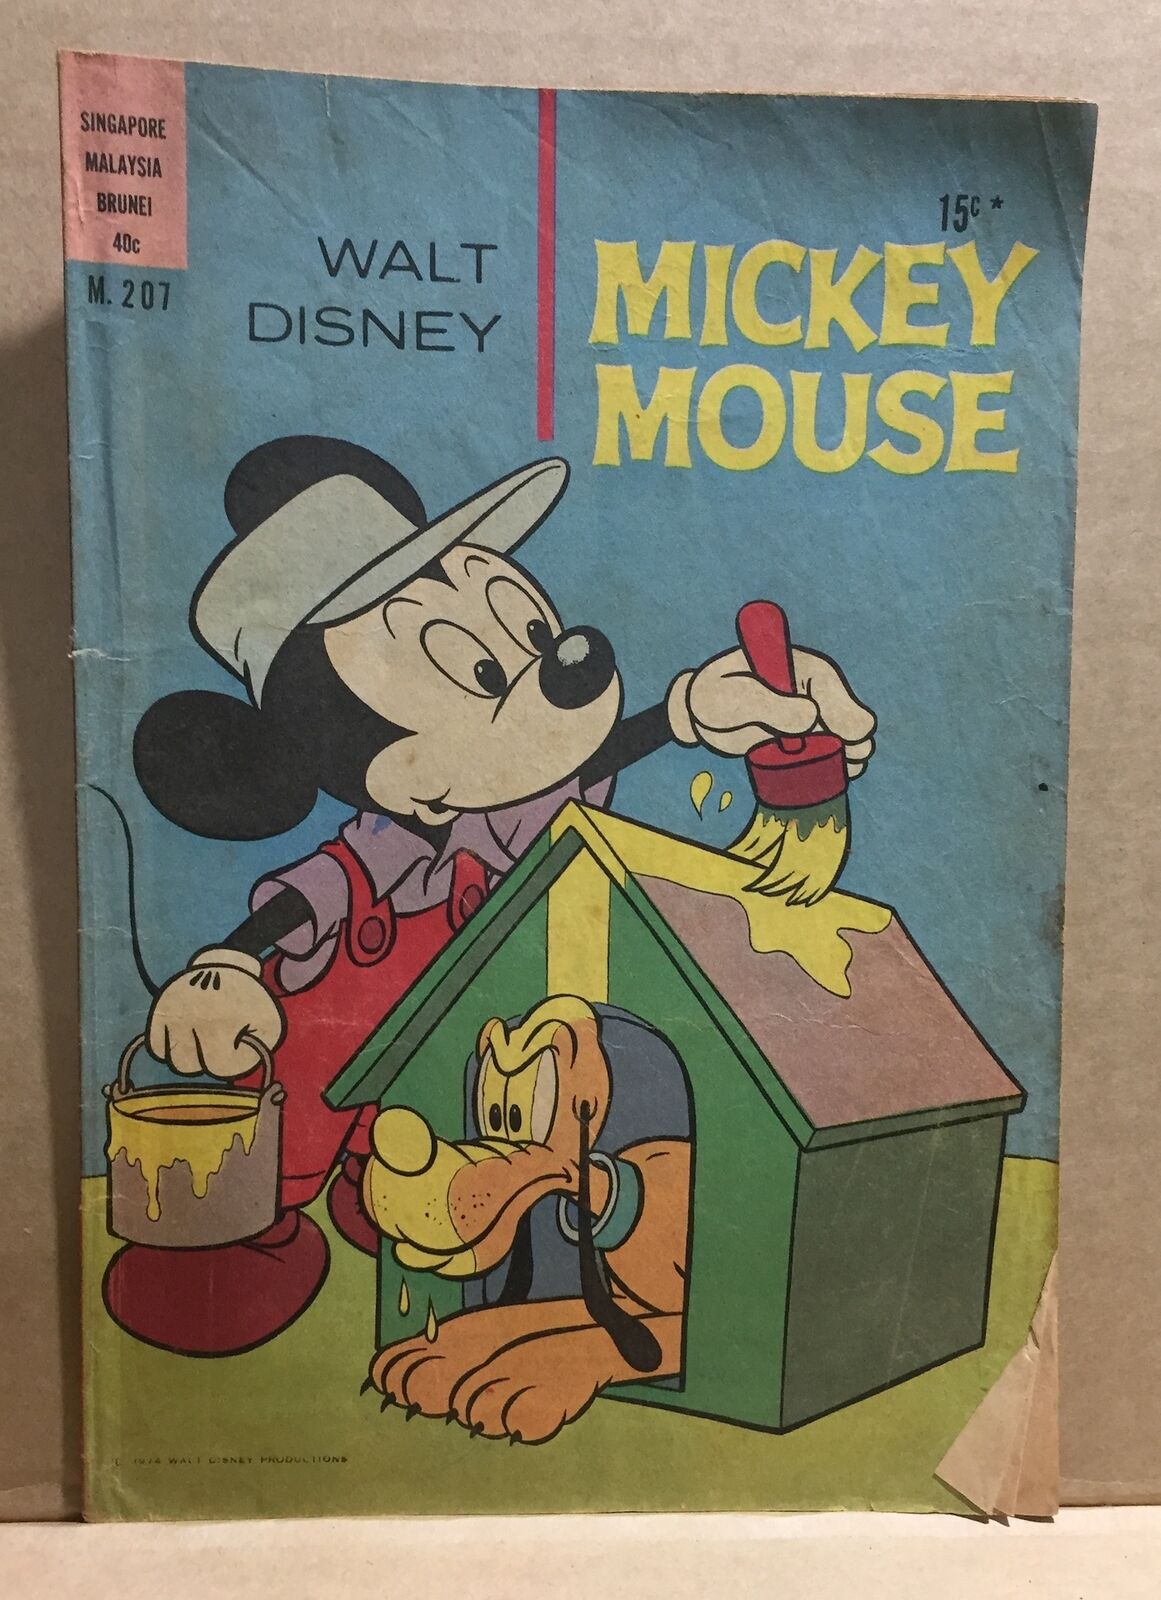 WALT DISNEY COMIC BOOK - MICKEY MOUSE M.207  australian